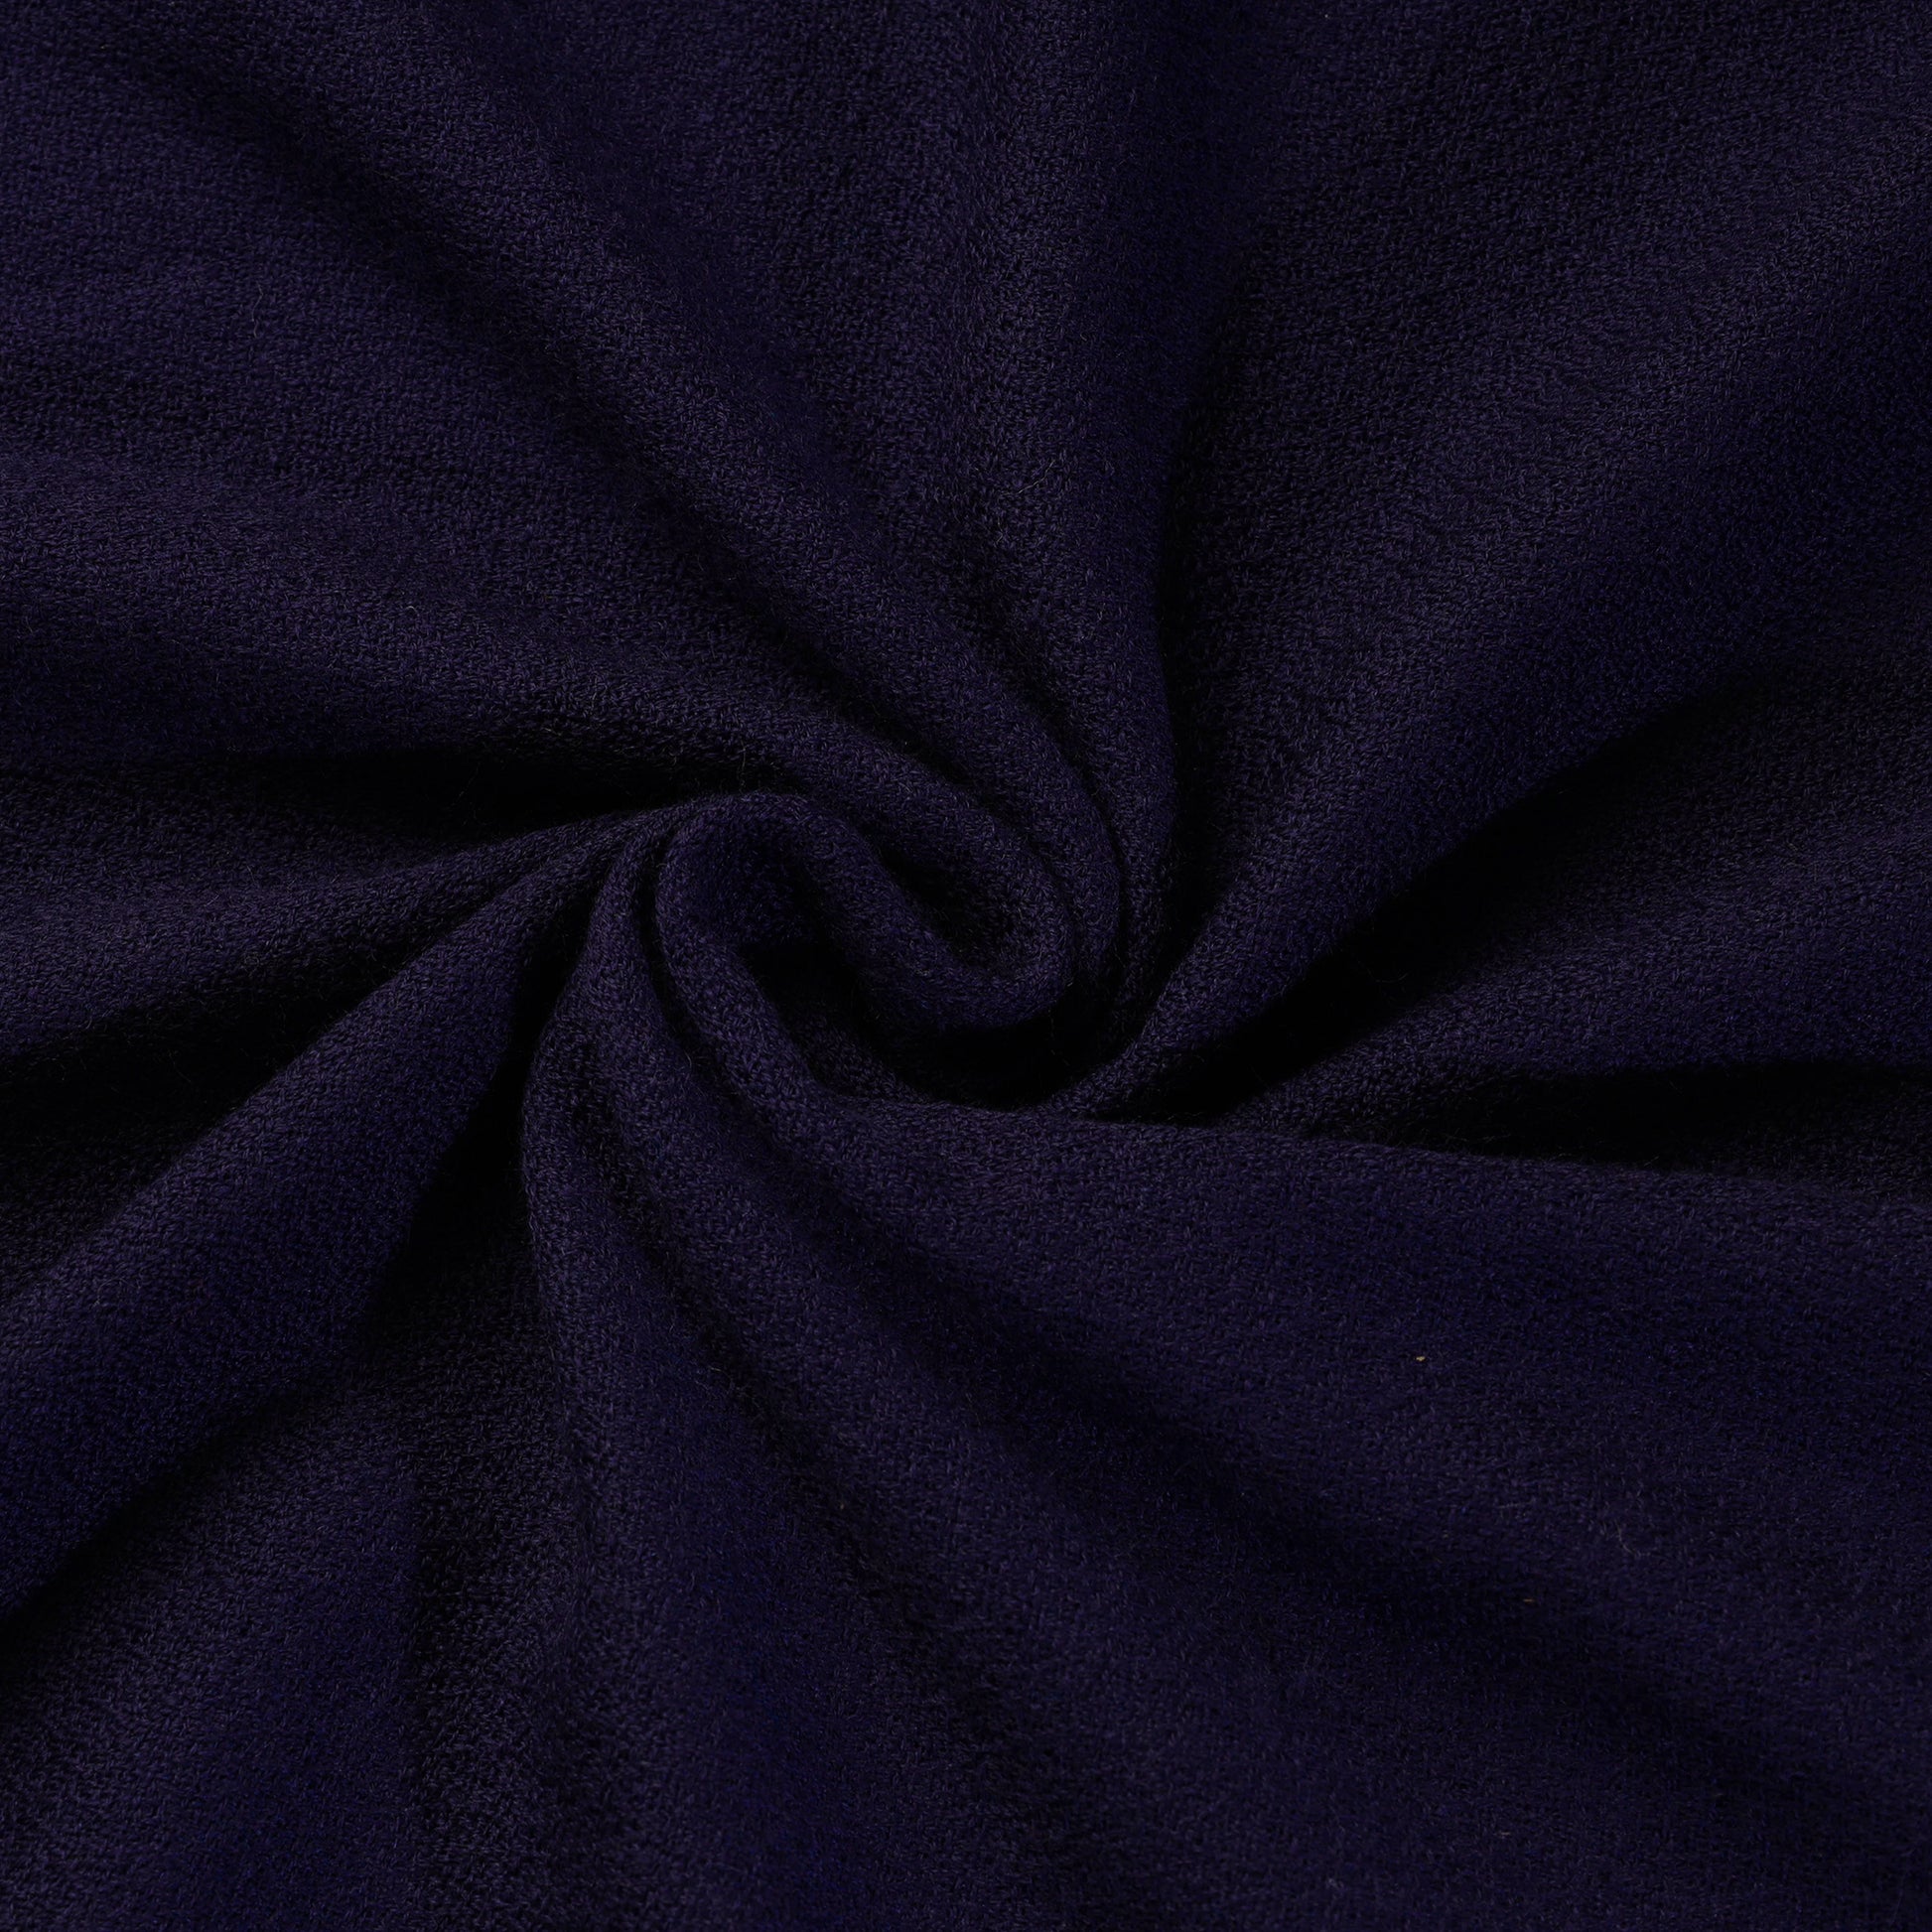 plain wool fabric